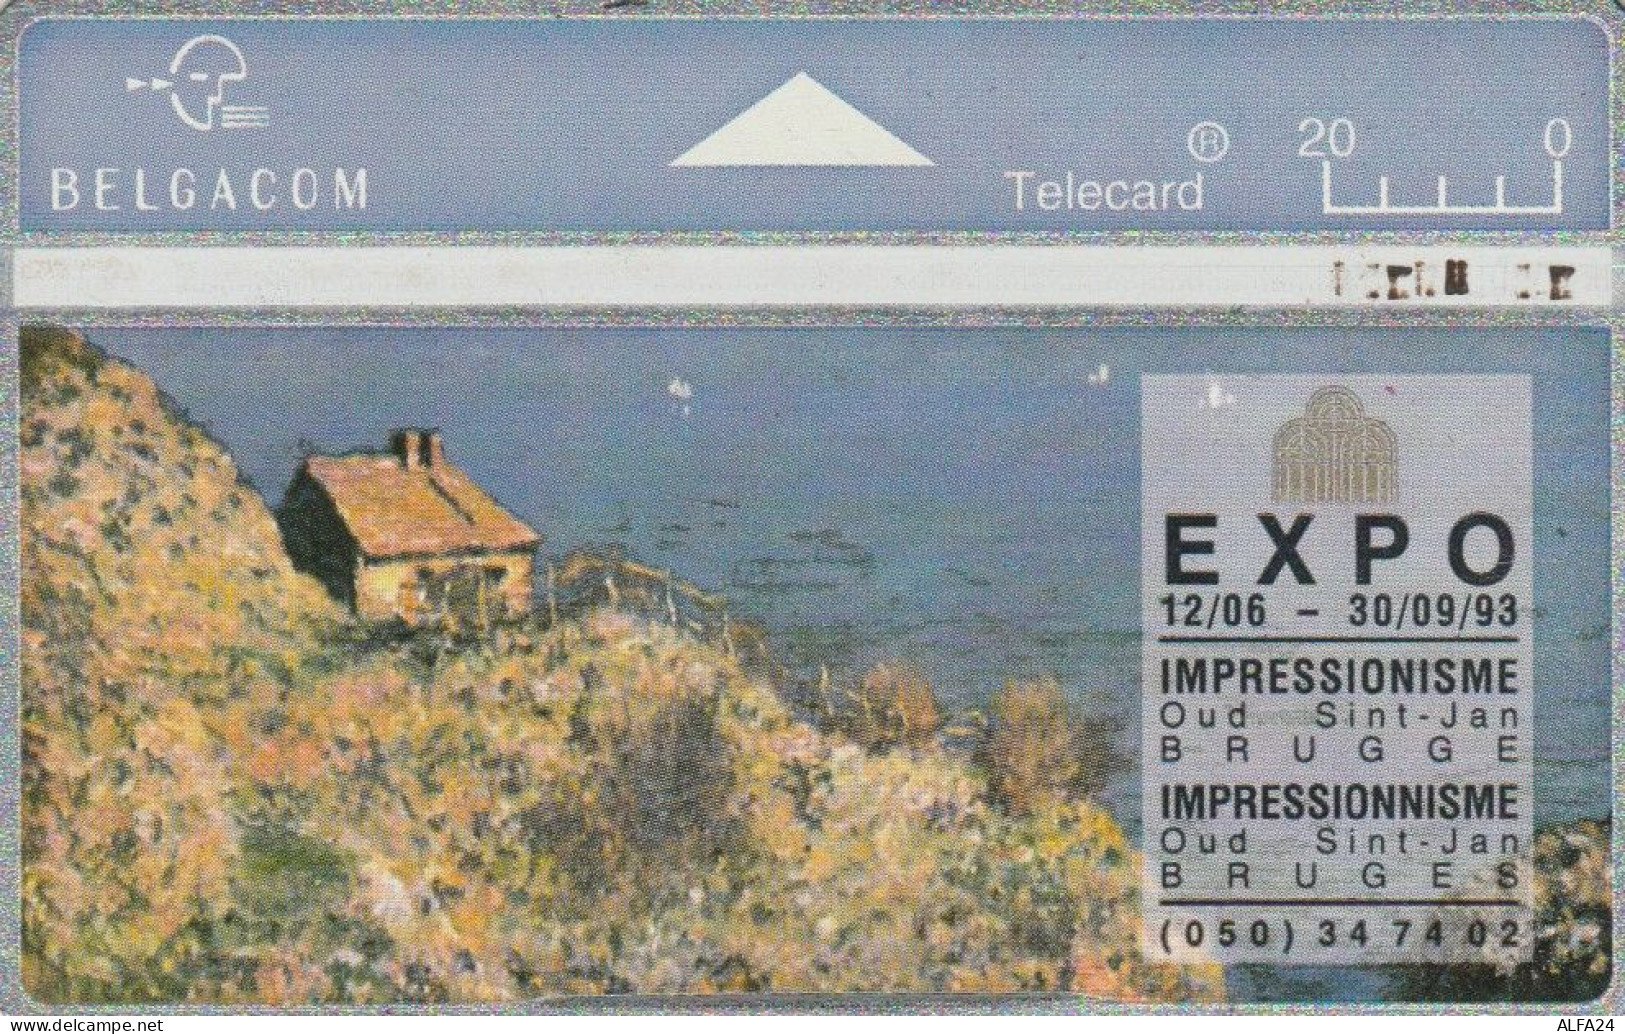 PHONE CARD BELGIO LANDIS (M.57.7 - Senza Chip